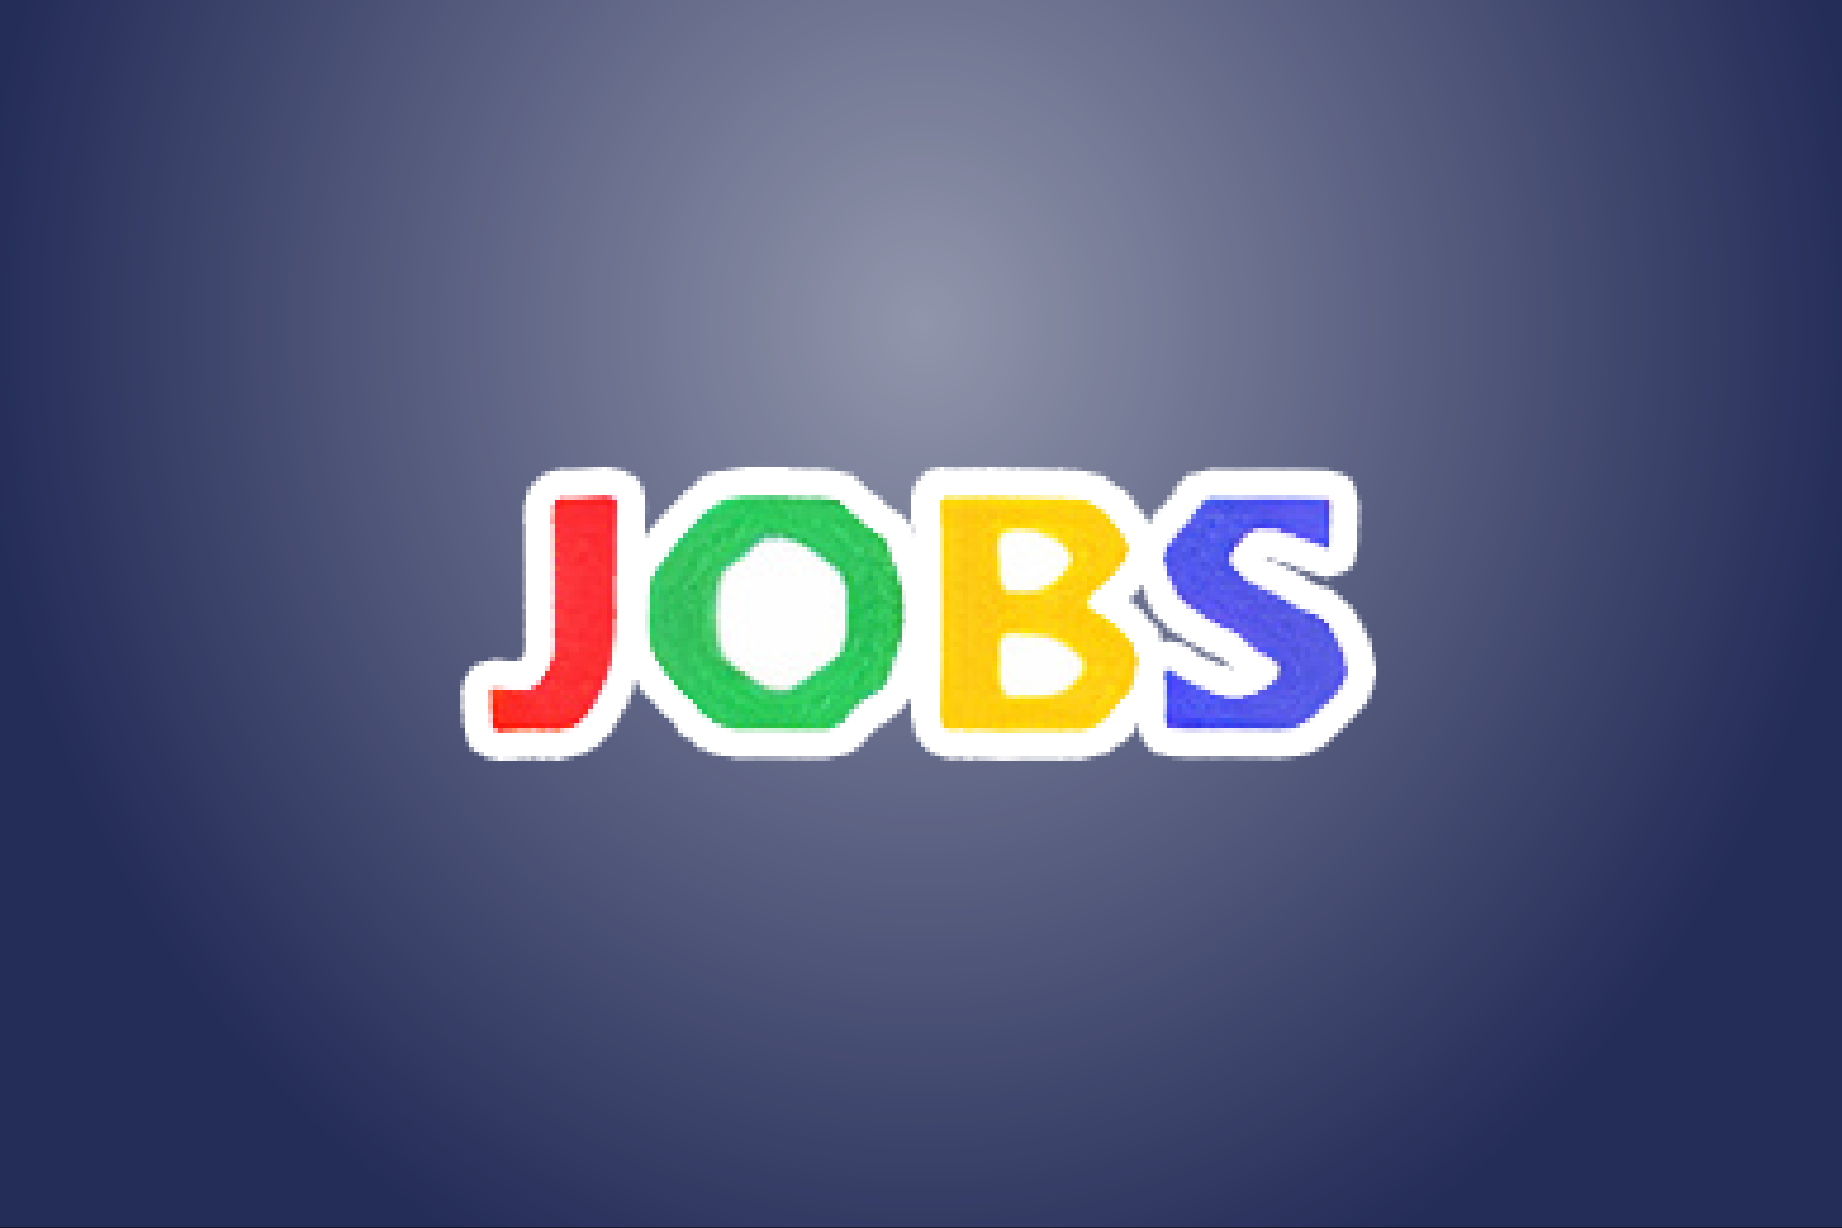 JOBSA graphic that reads "JOBS"